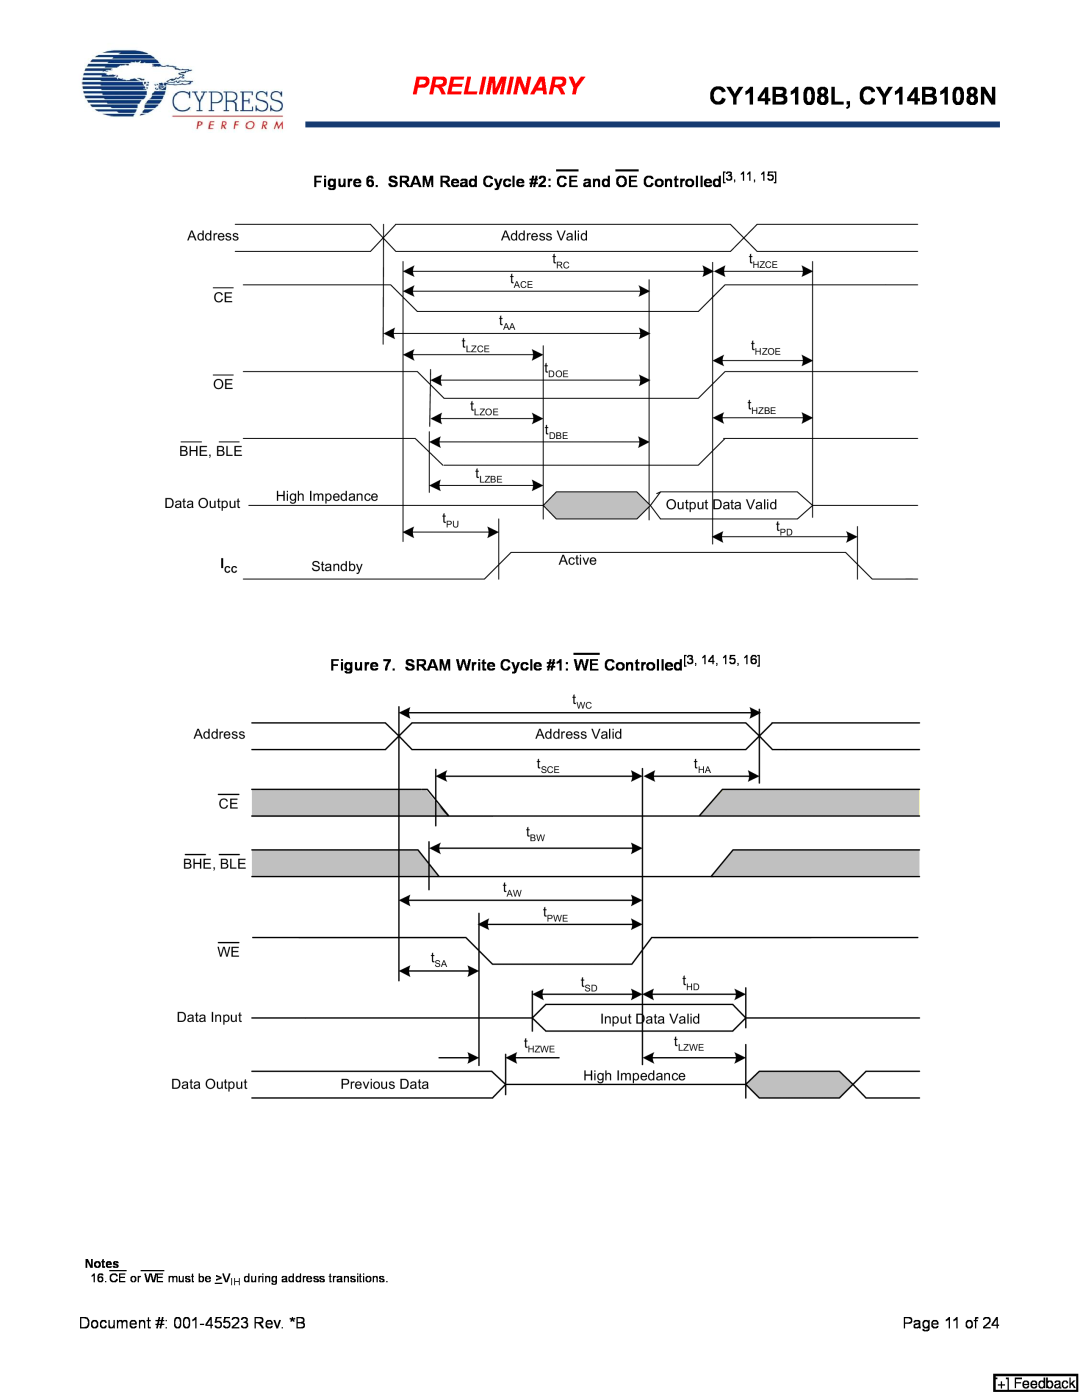 Cypress manual Preliminary, CY14B108L, CY14B108N, SRAM Read Cycle #2 CE and OE Controlled3, 11, + Feedback 